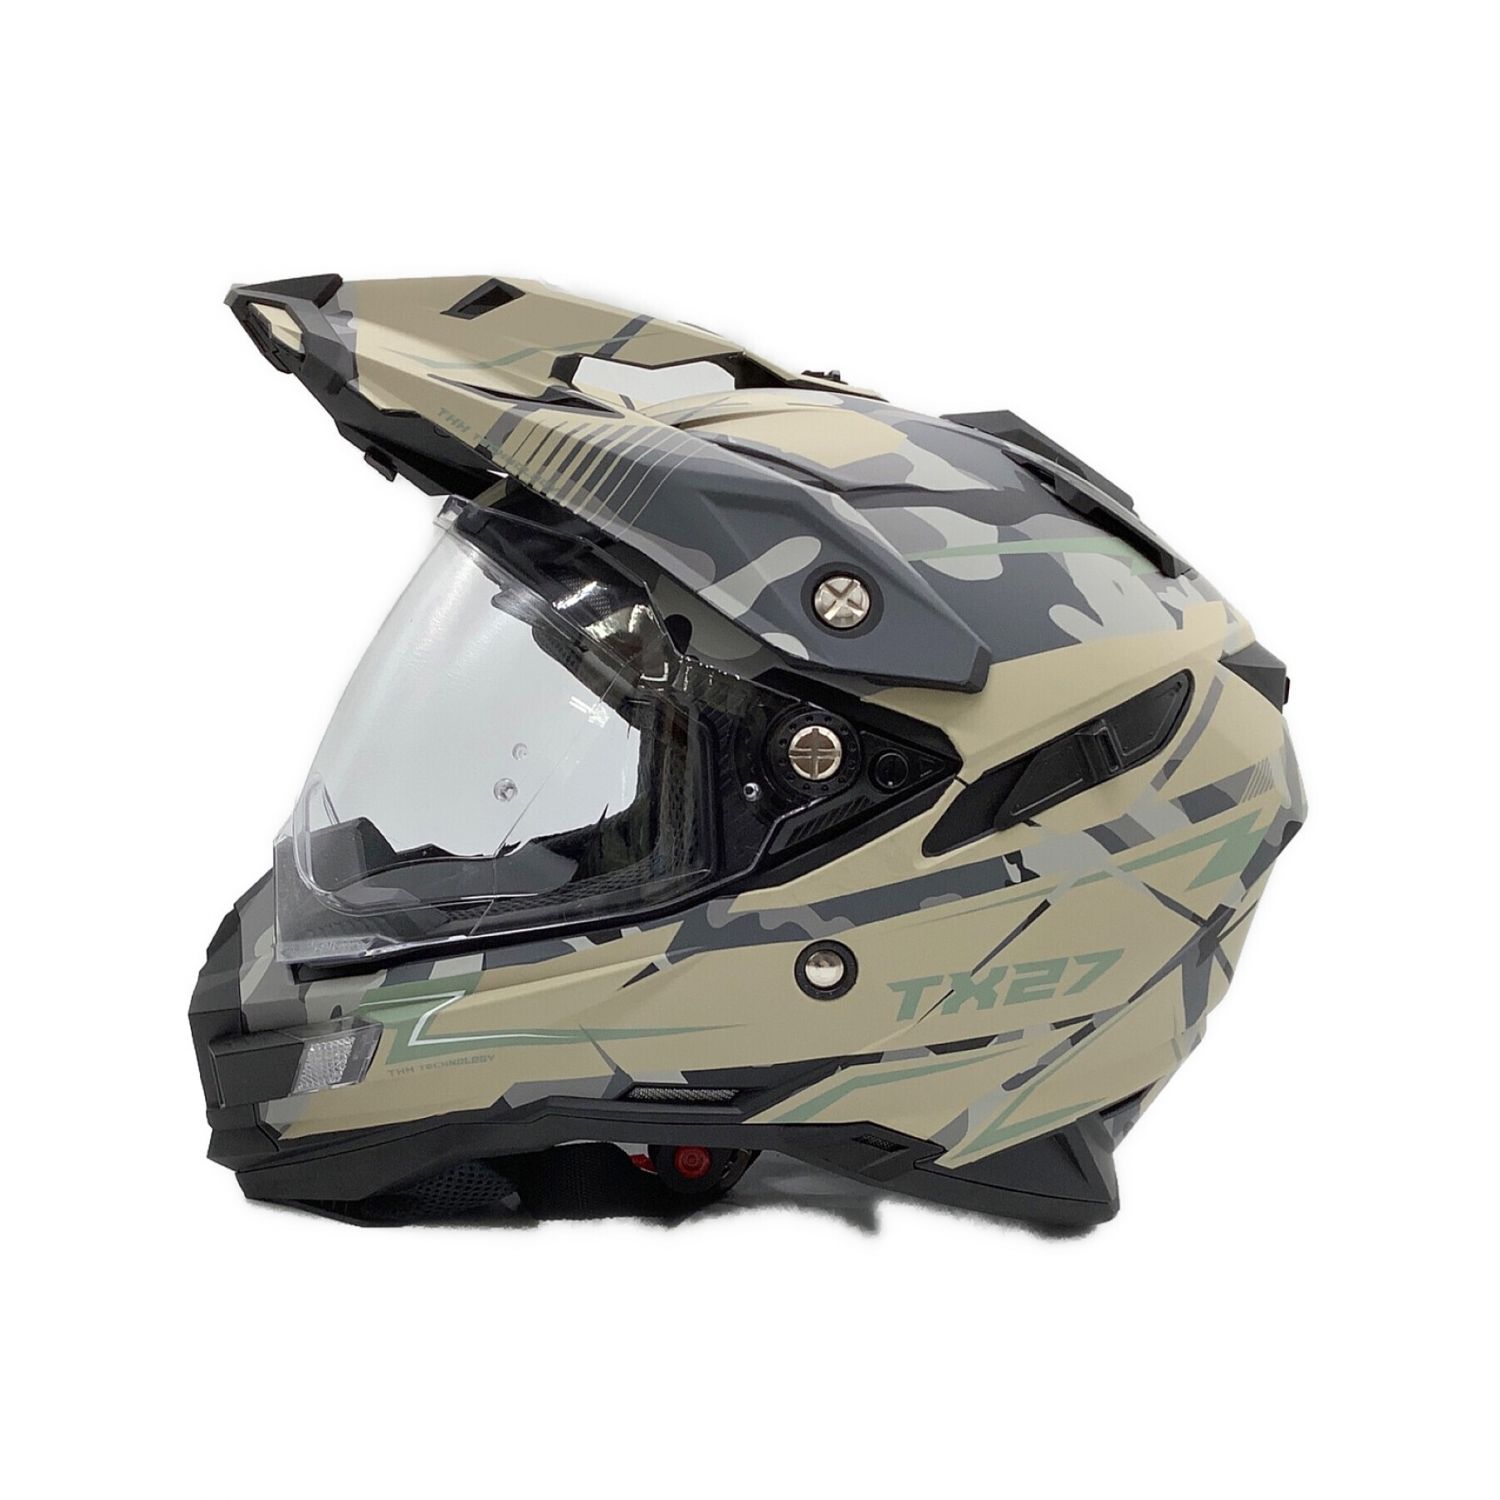 THH バイク用ヘルメット SIZE XL TX-27 Trooper PSCマーク(バイク用ヘルメット)有